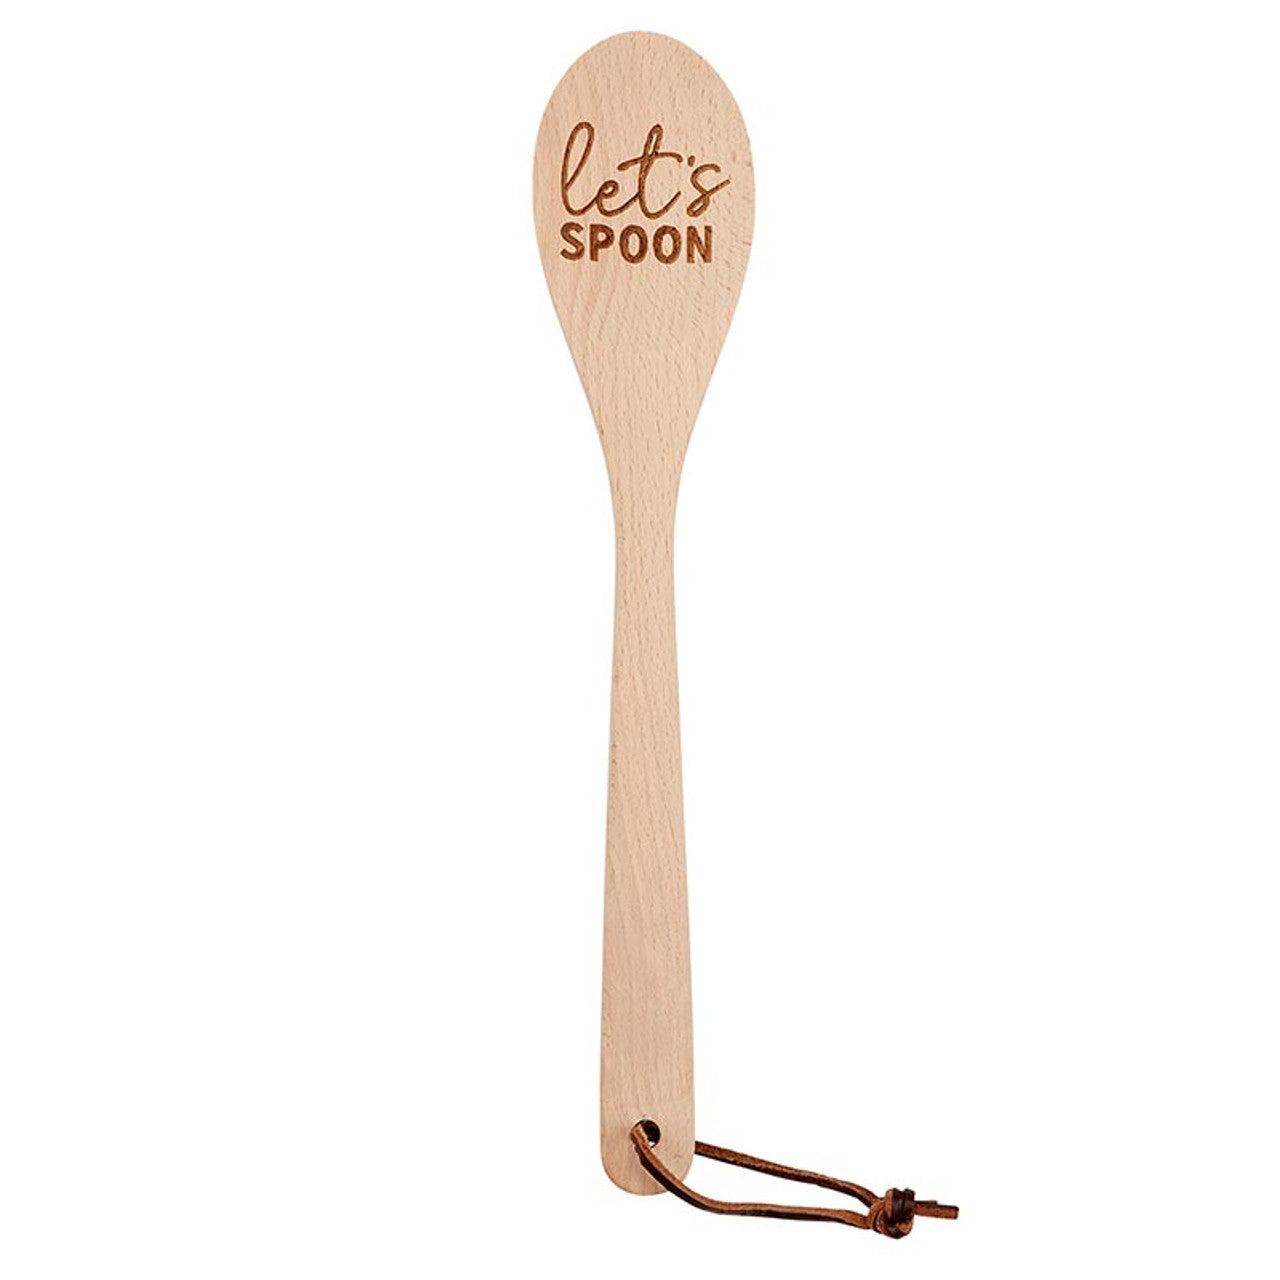 Let's Spoon - Wooden Spoon